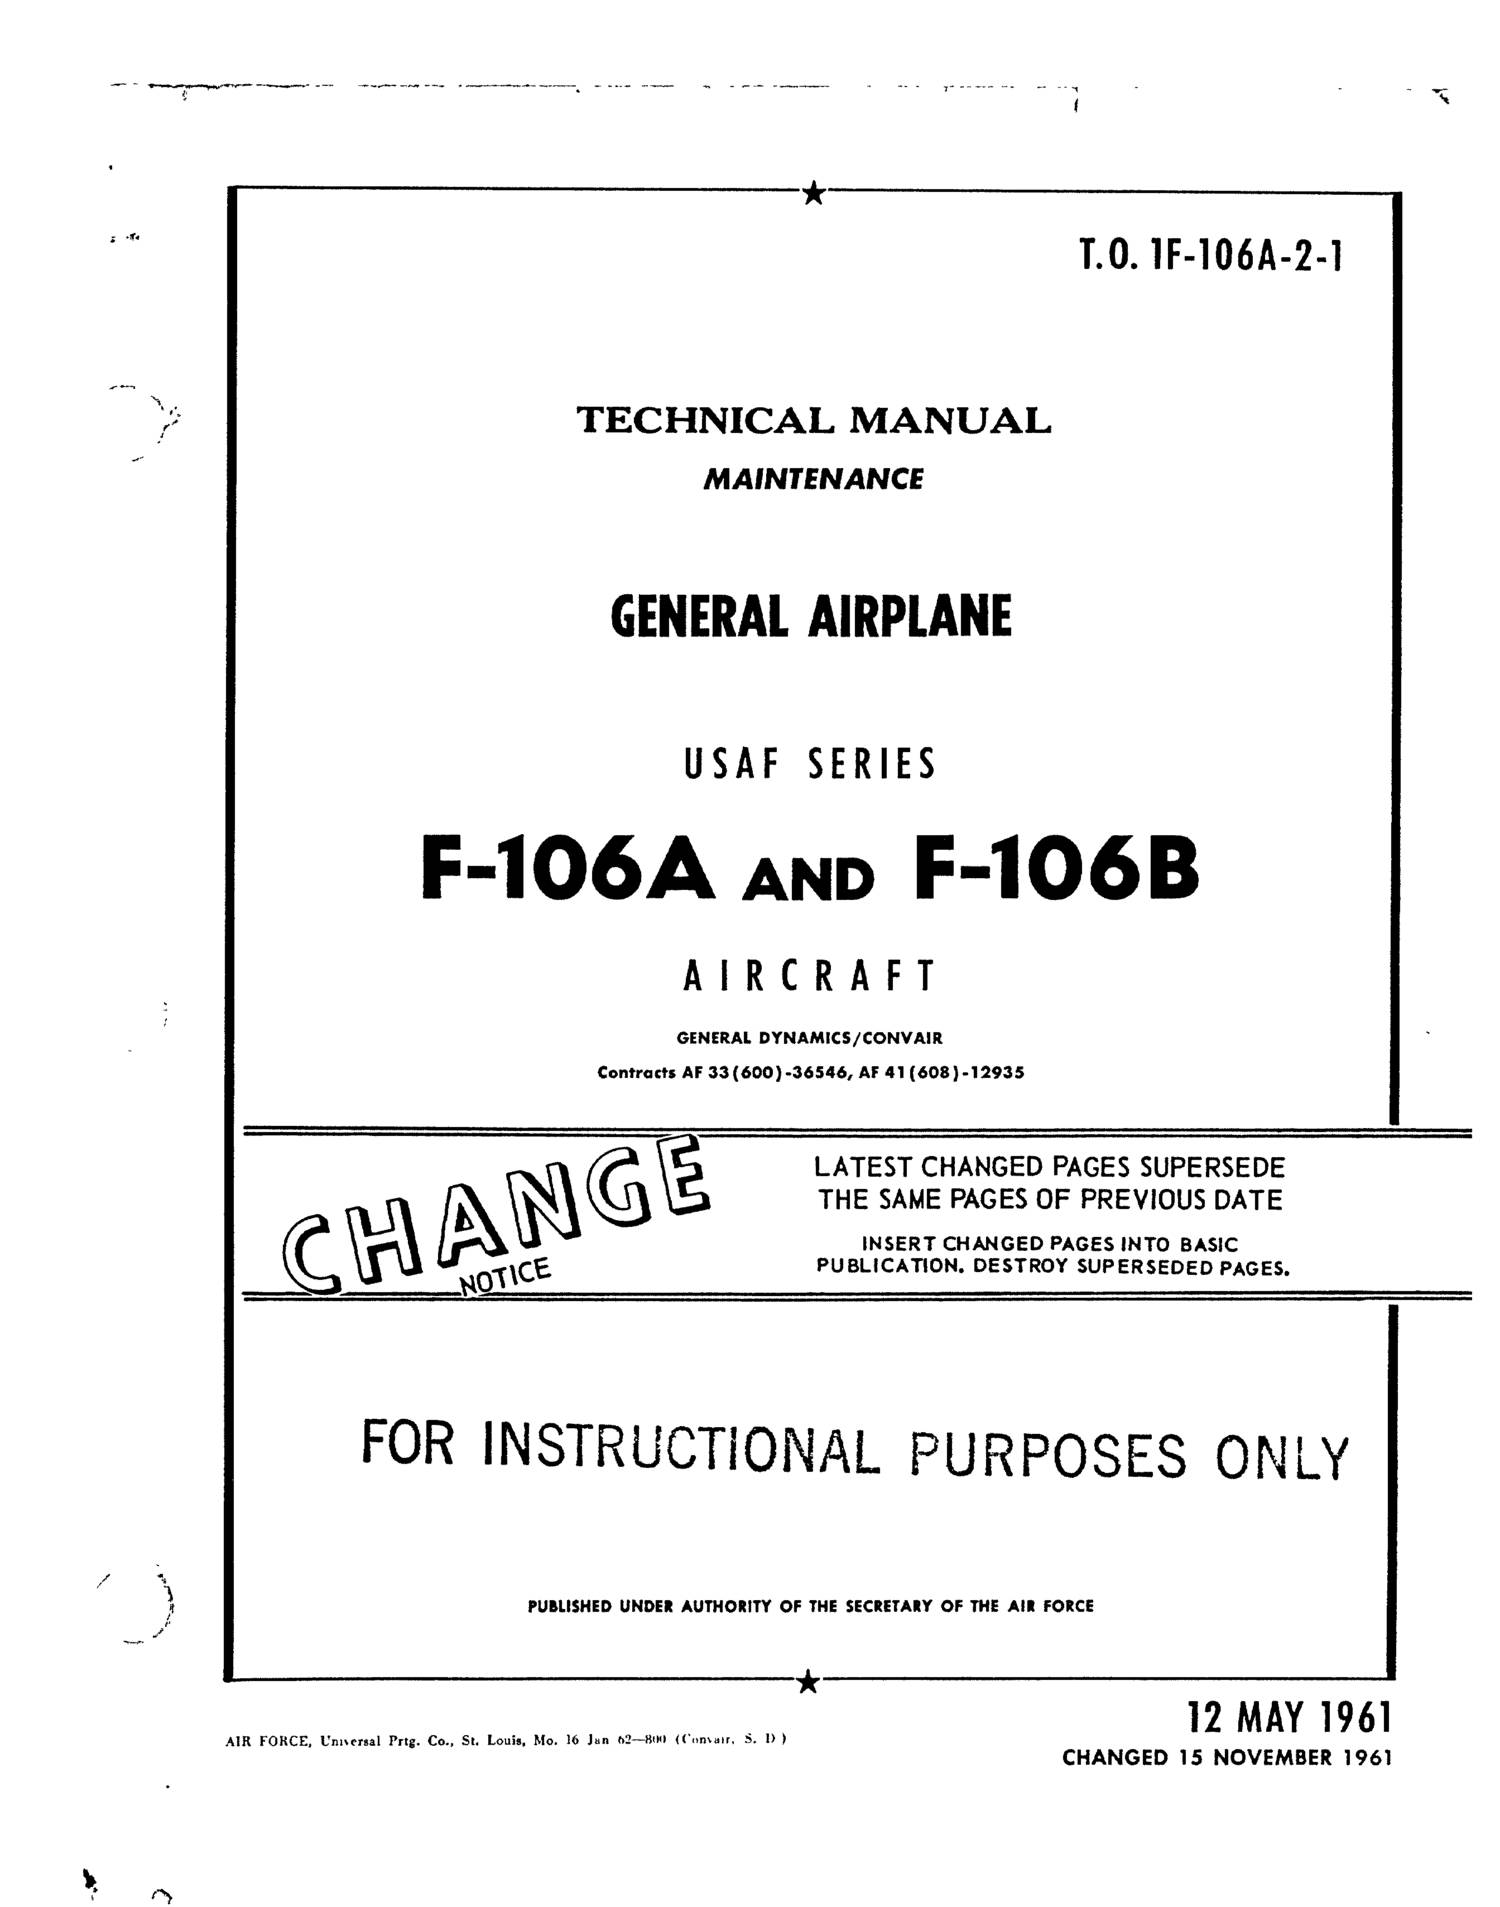 Convair F-106A and B Maintenance Manual.pdf | DocDroid